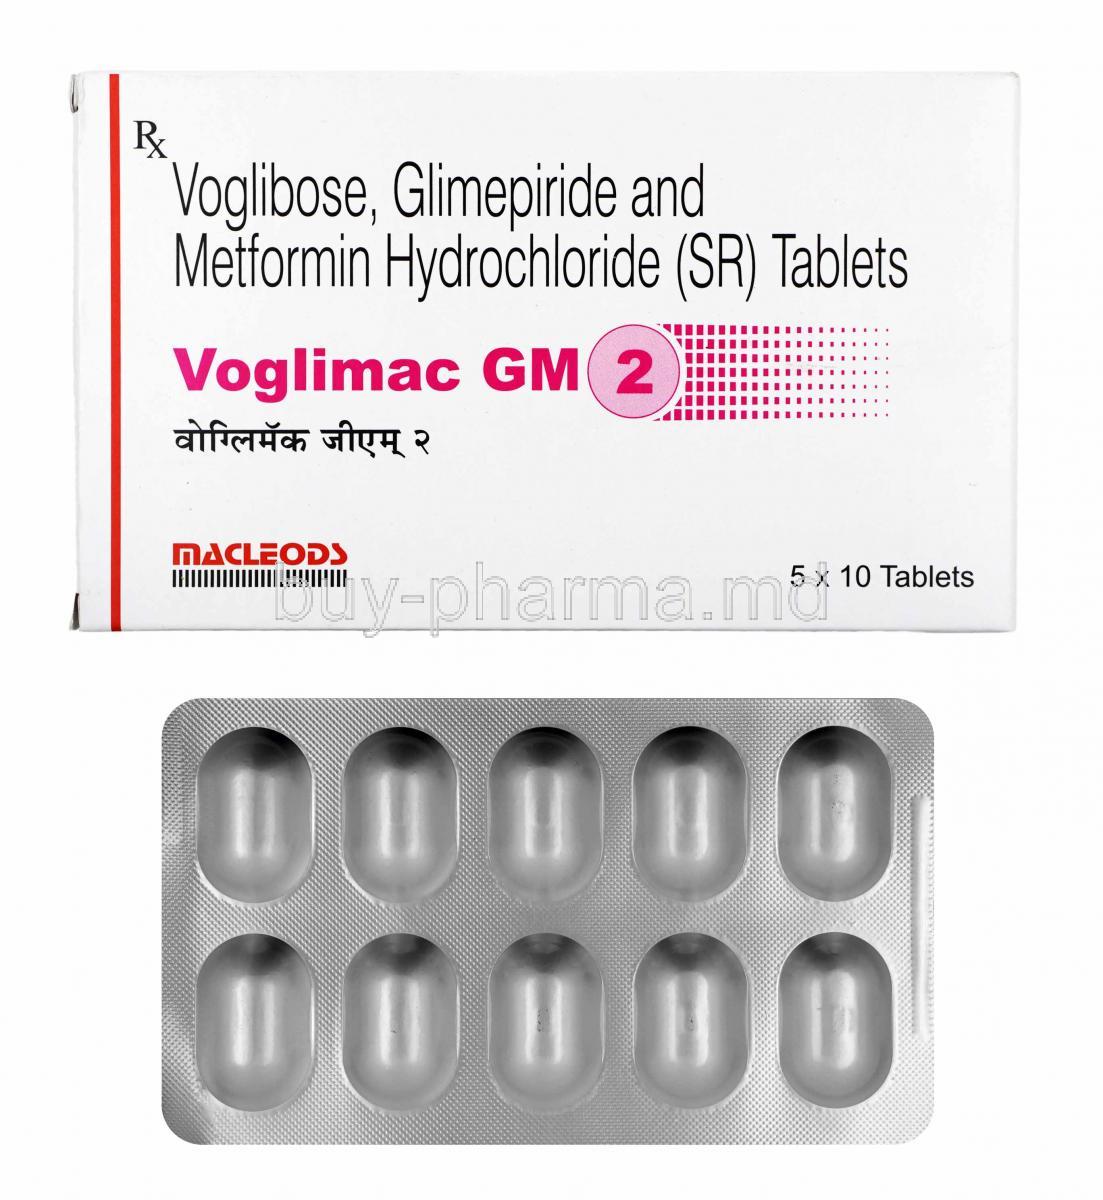 Voglimac GM, Glimepiride, Metformin and Voglibose 2mg box and tablets